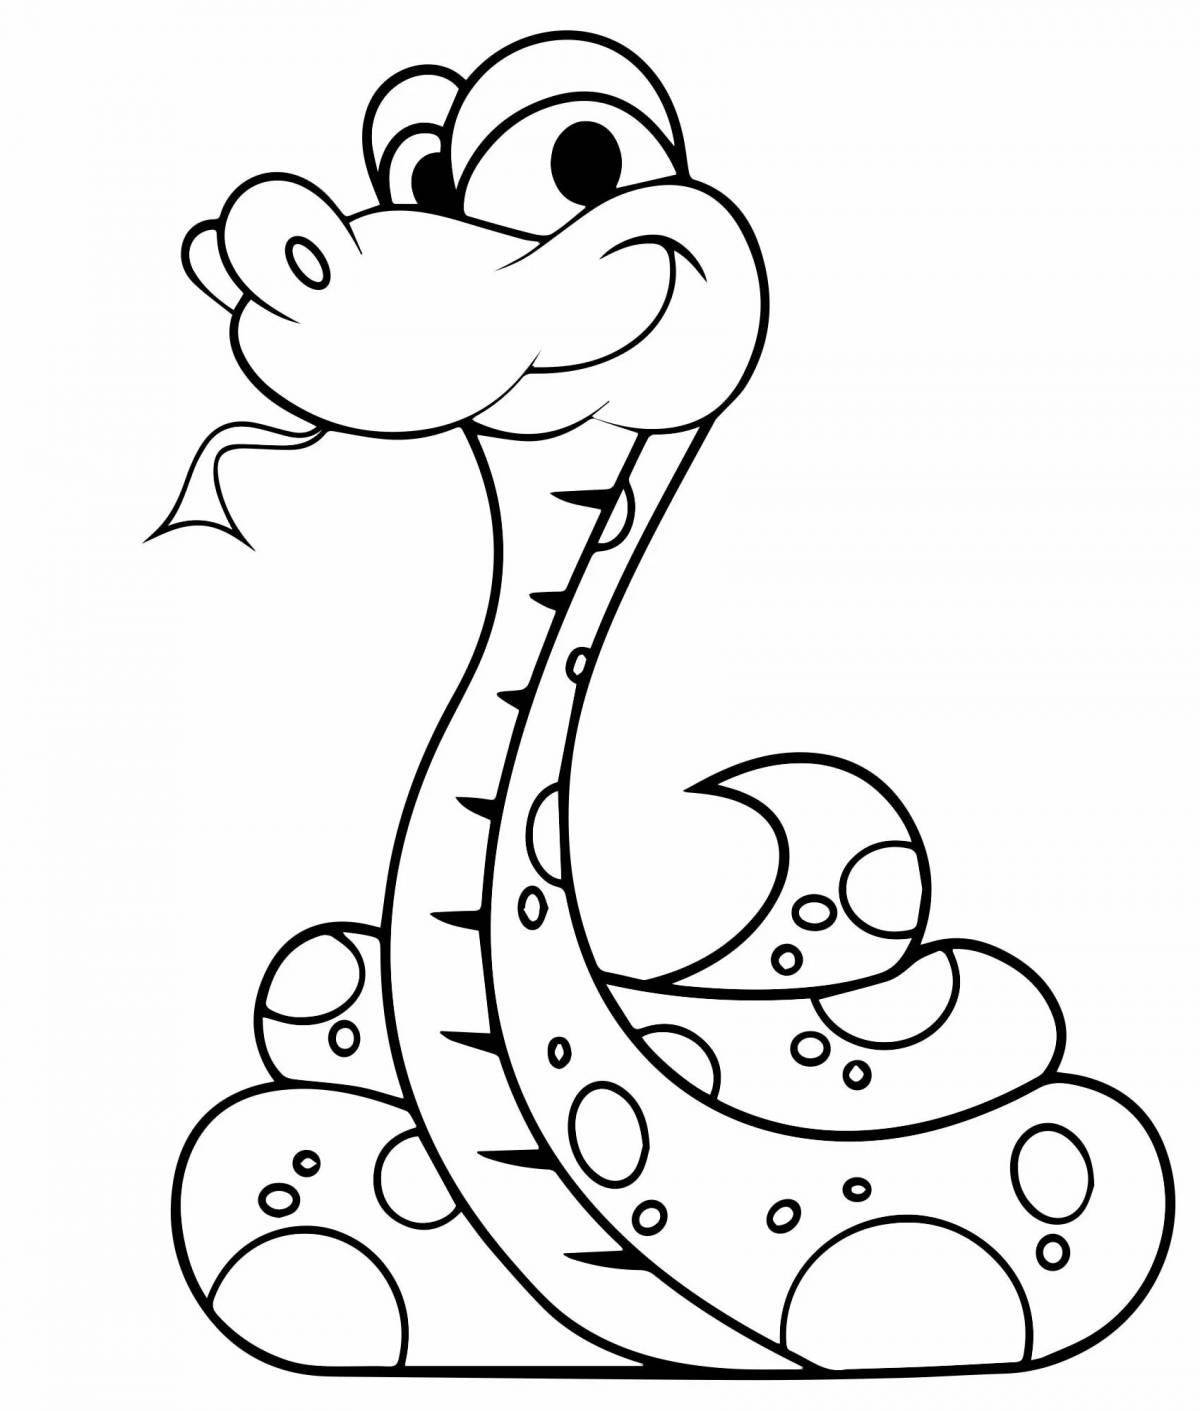 Vivid snake coloring for kids